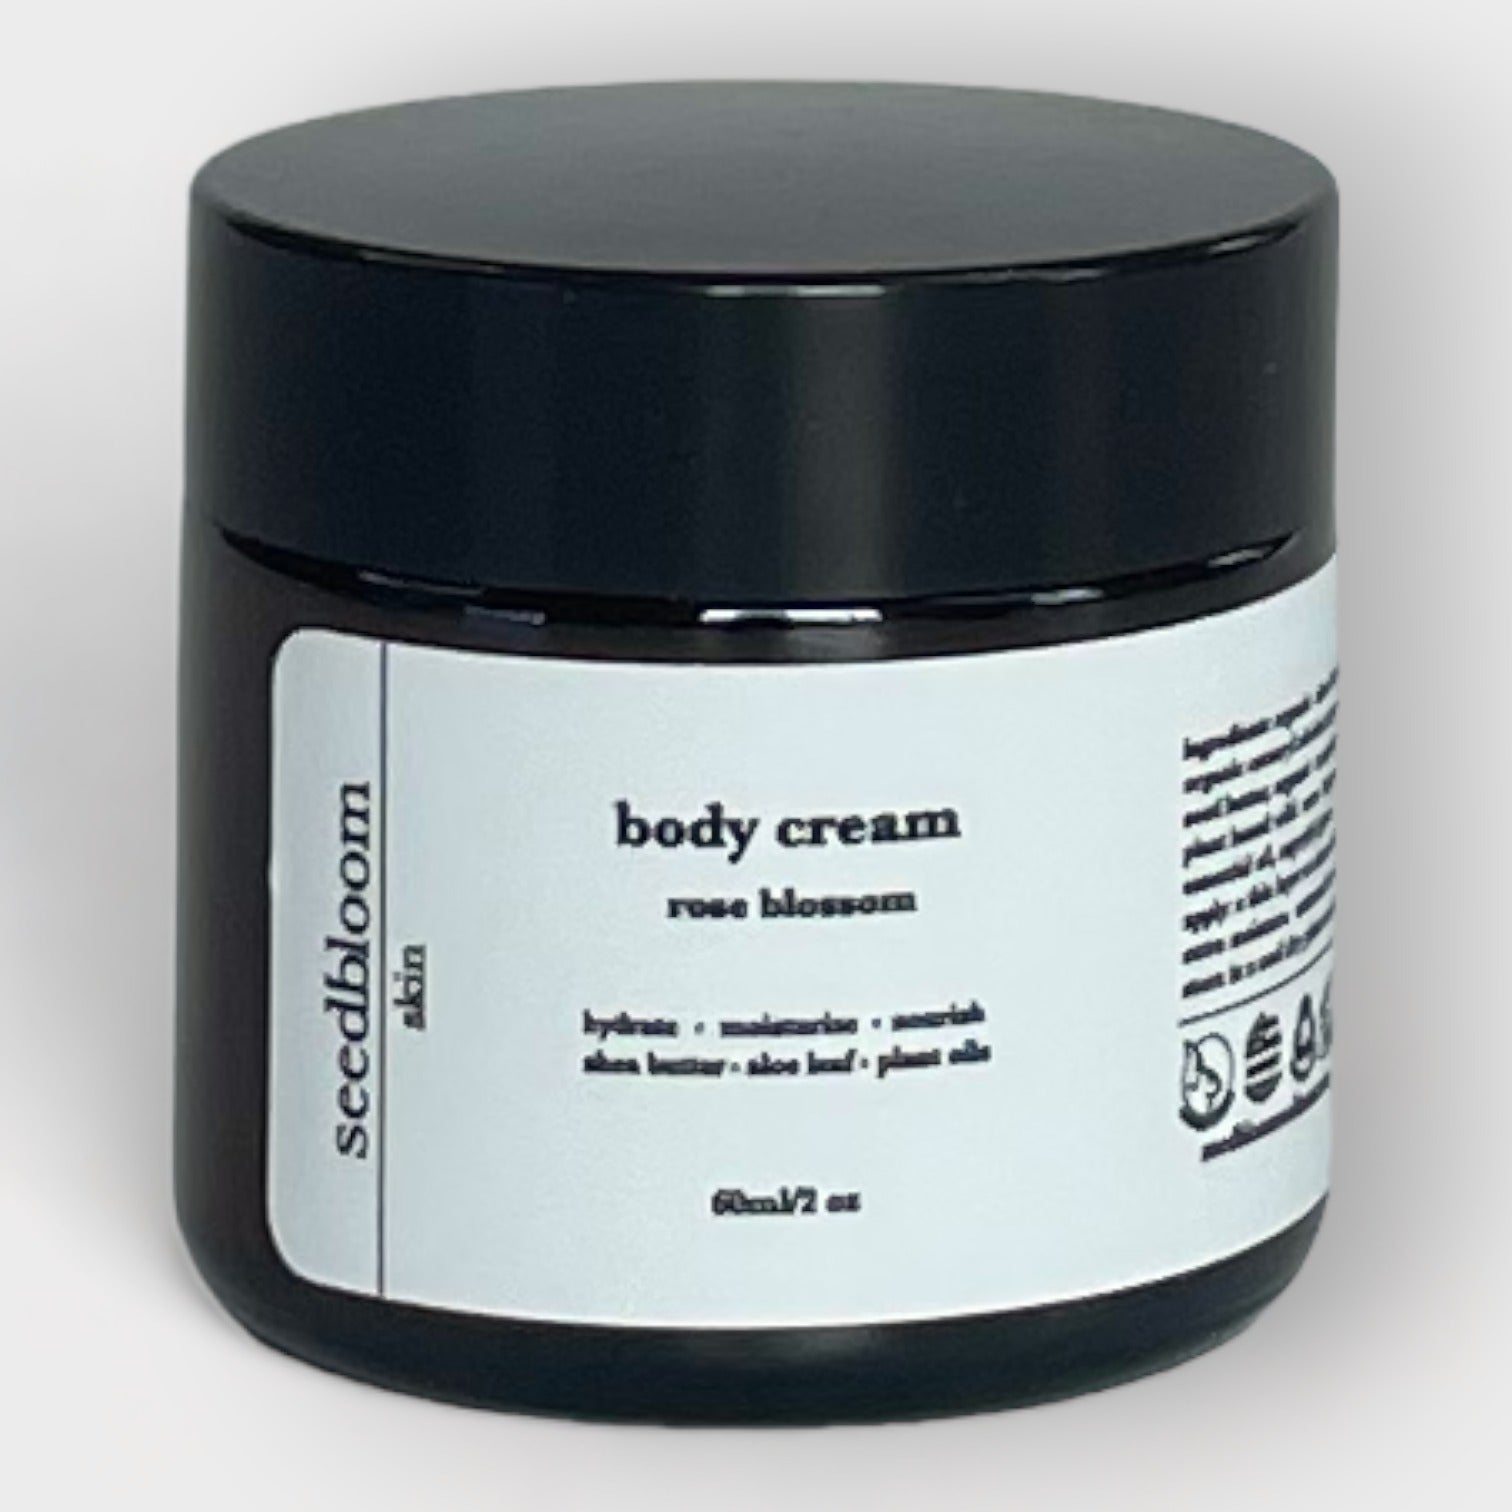 Jar of seedbloom body cream on white background